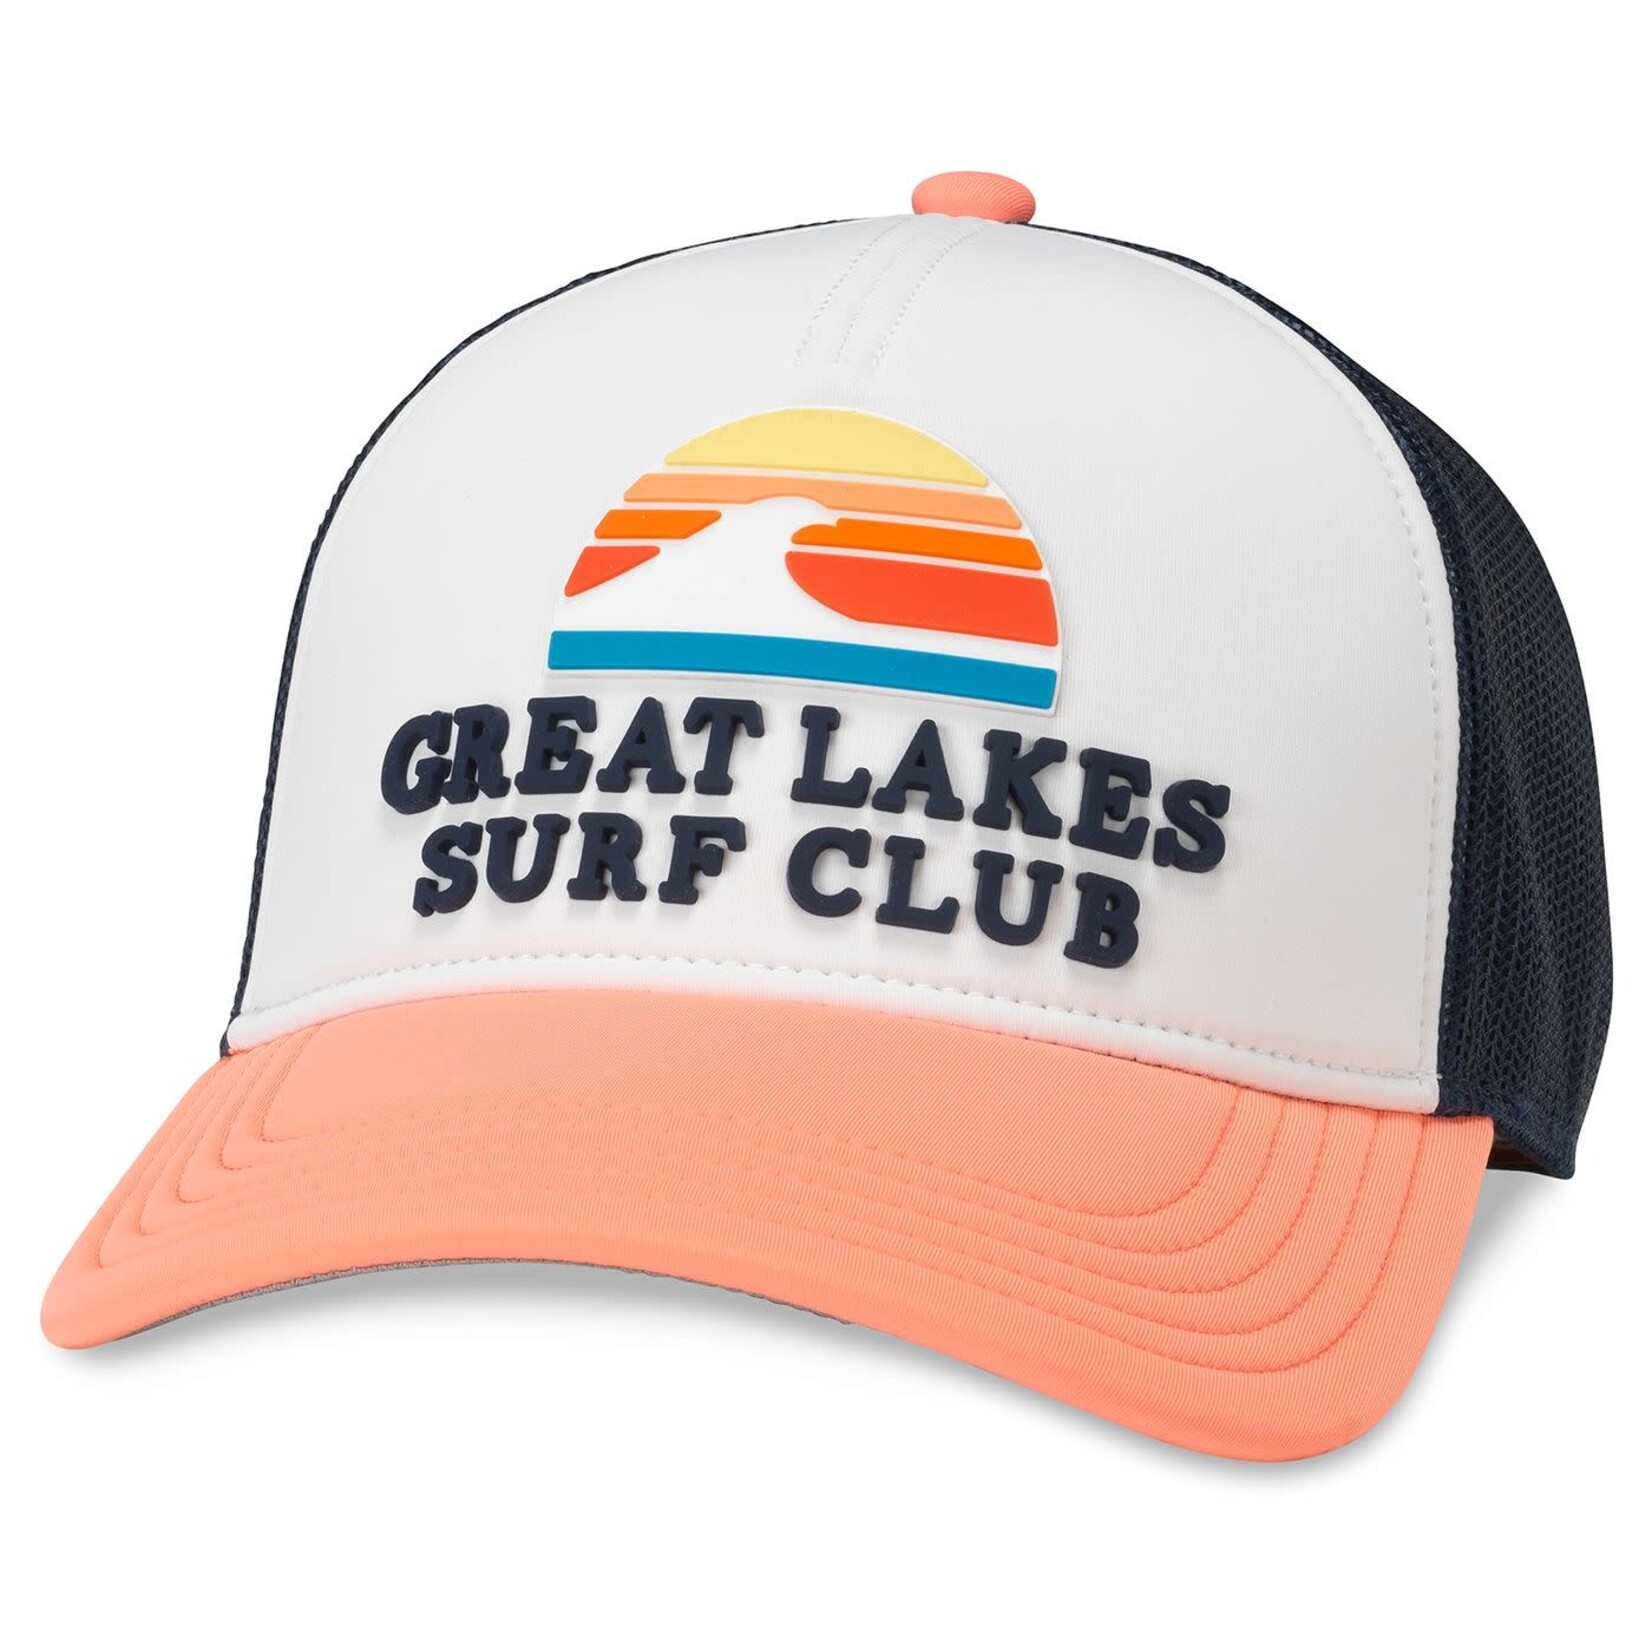 American Needle Great Lakes Surf Club Ball Cap